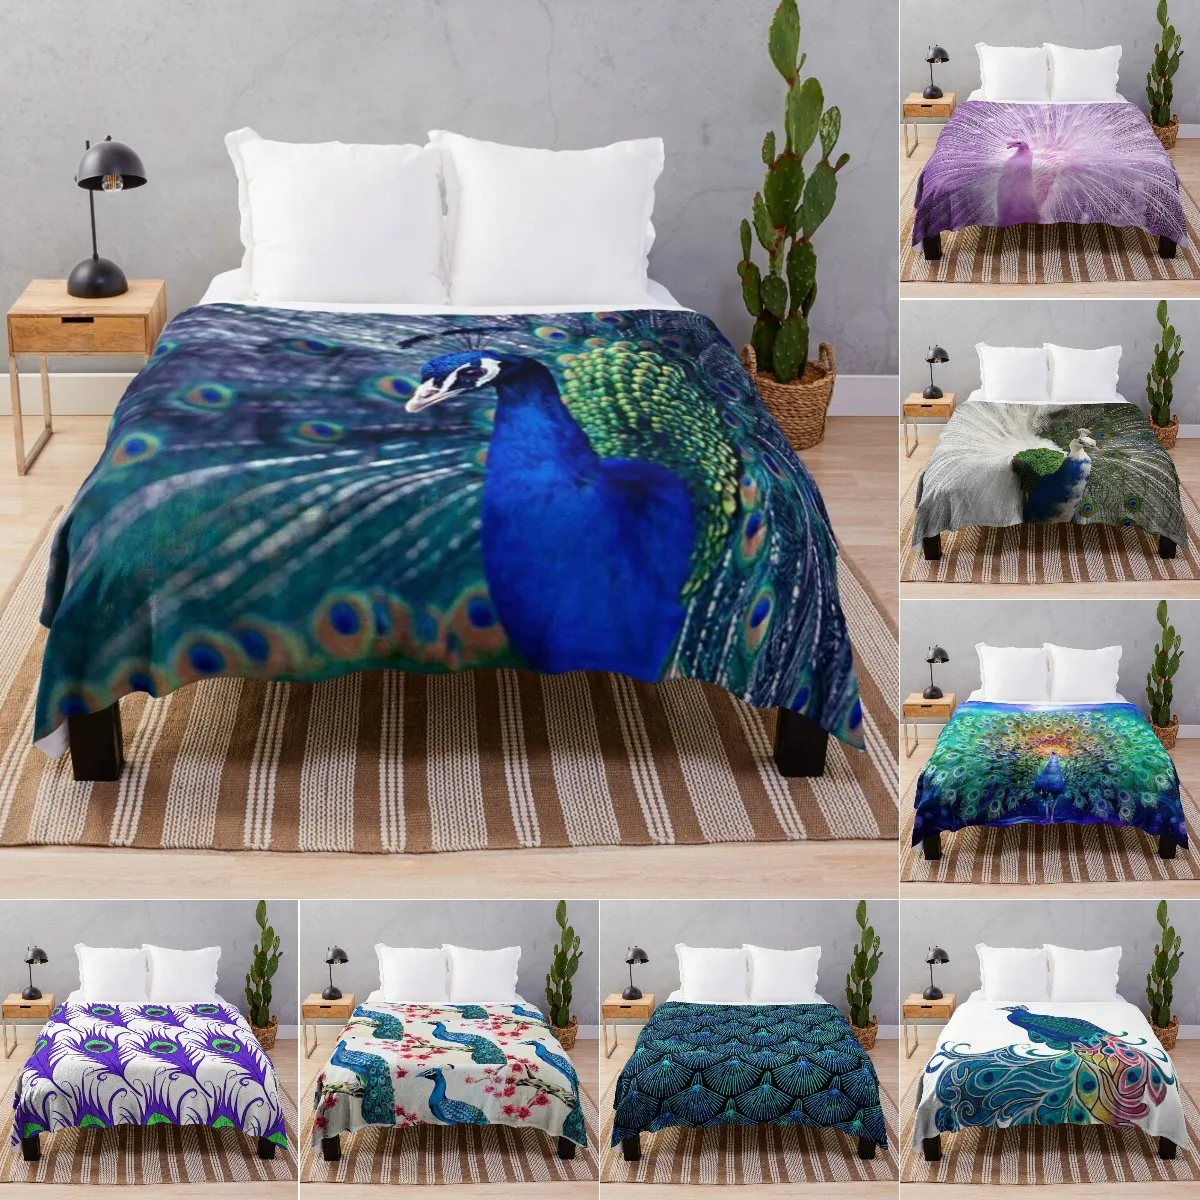 

Peacock Flannel Fleece Throw Blanket, Ultra Soft Cozy Warm Lightweight Microfleece Blanket for Home Bedroom Living Rooms Couch